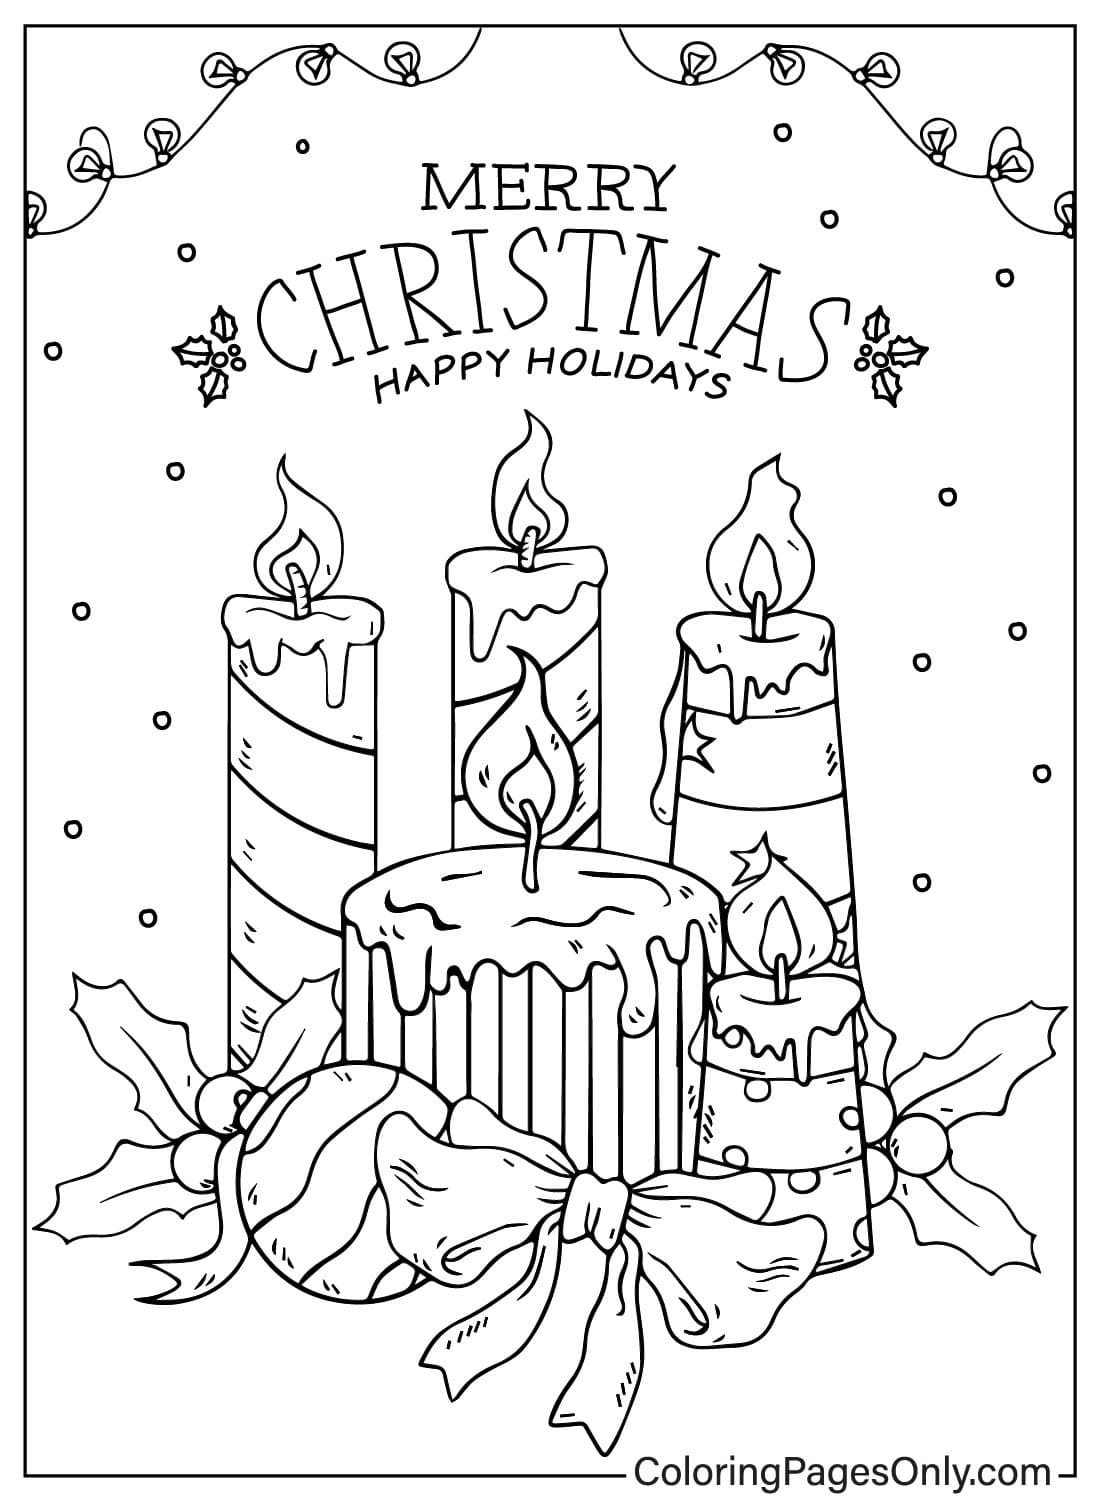 صفحات تلوين شموع عيد الميلاد للطباعة من شموع عيد الميلاد